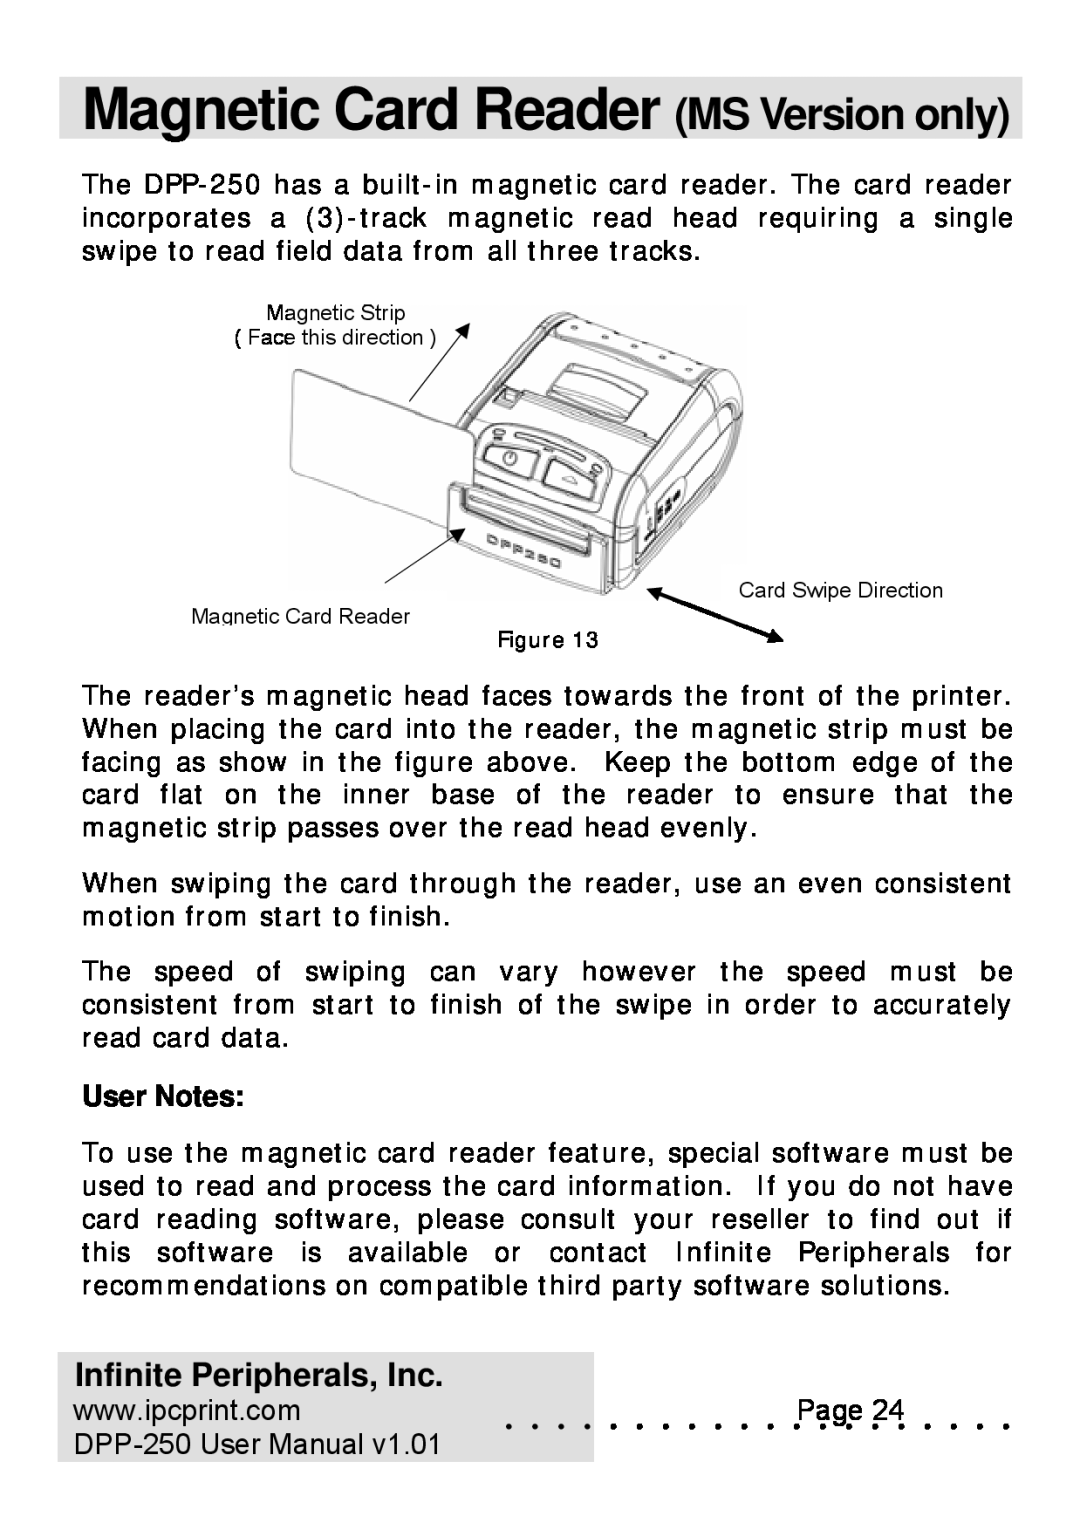 Infinite Peripherals DPP-250 user manual Magnetic Card Reader MS Version only, Infinite Peripherals, Inc, User Notes 